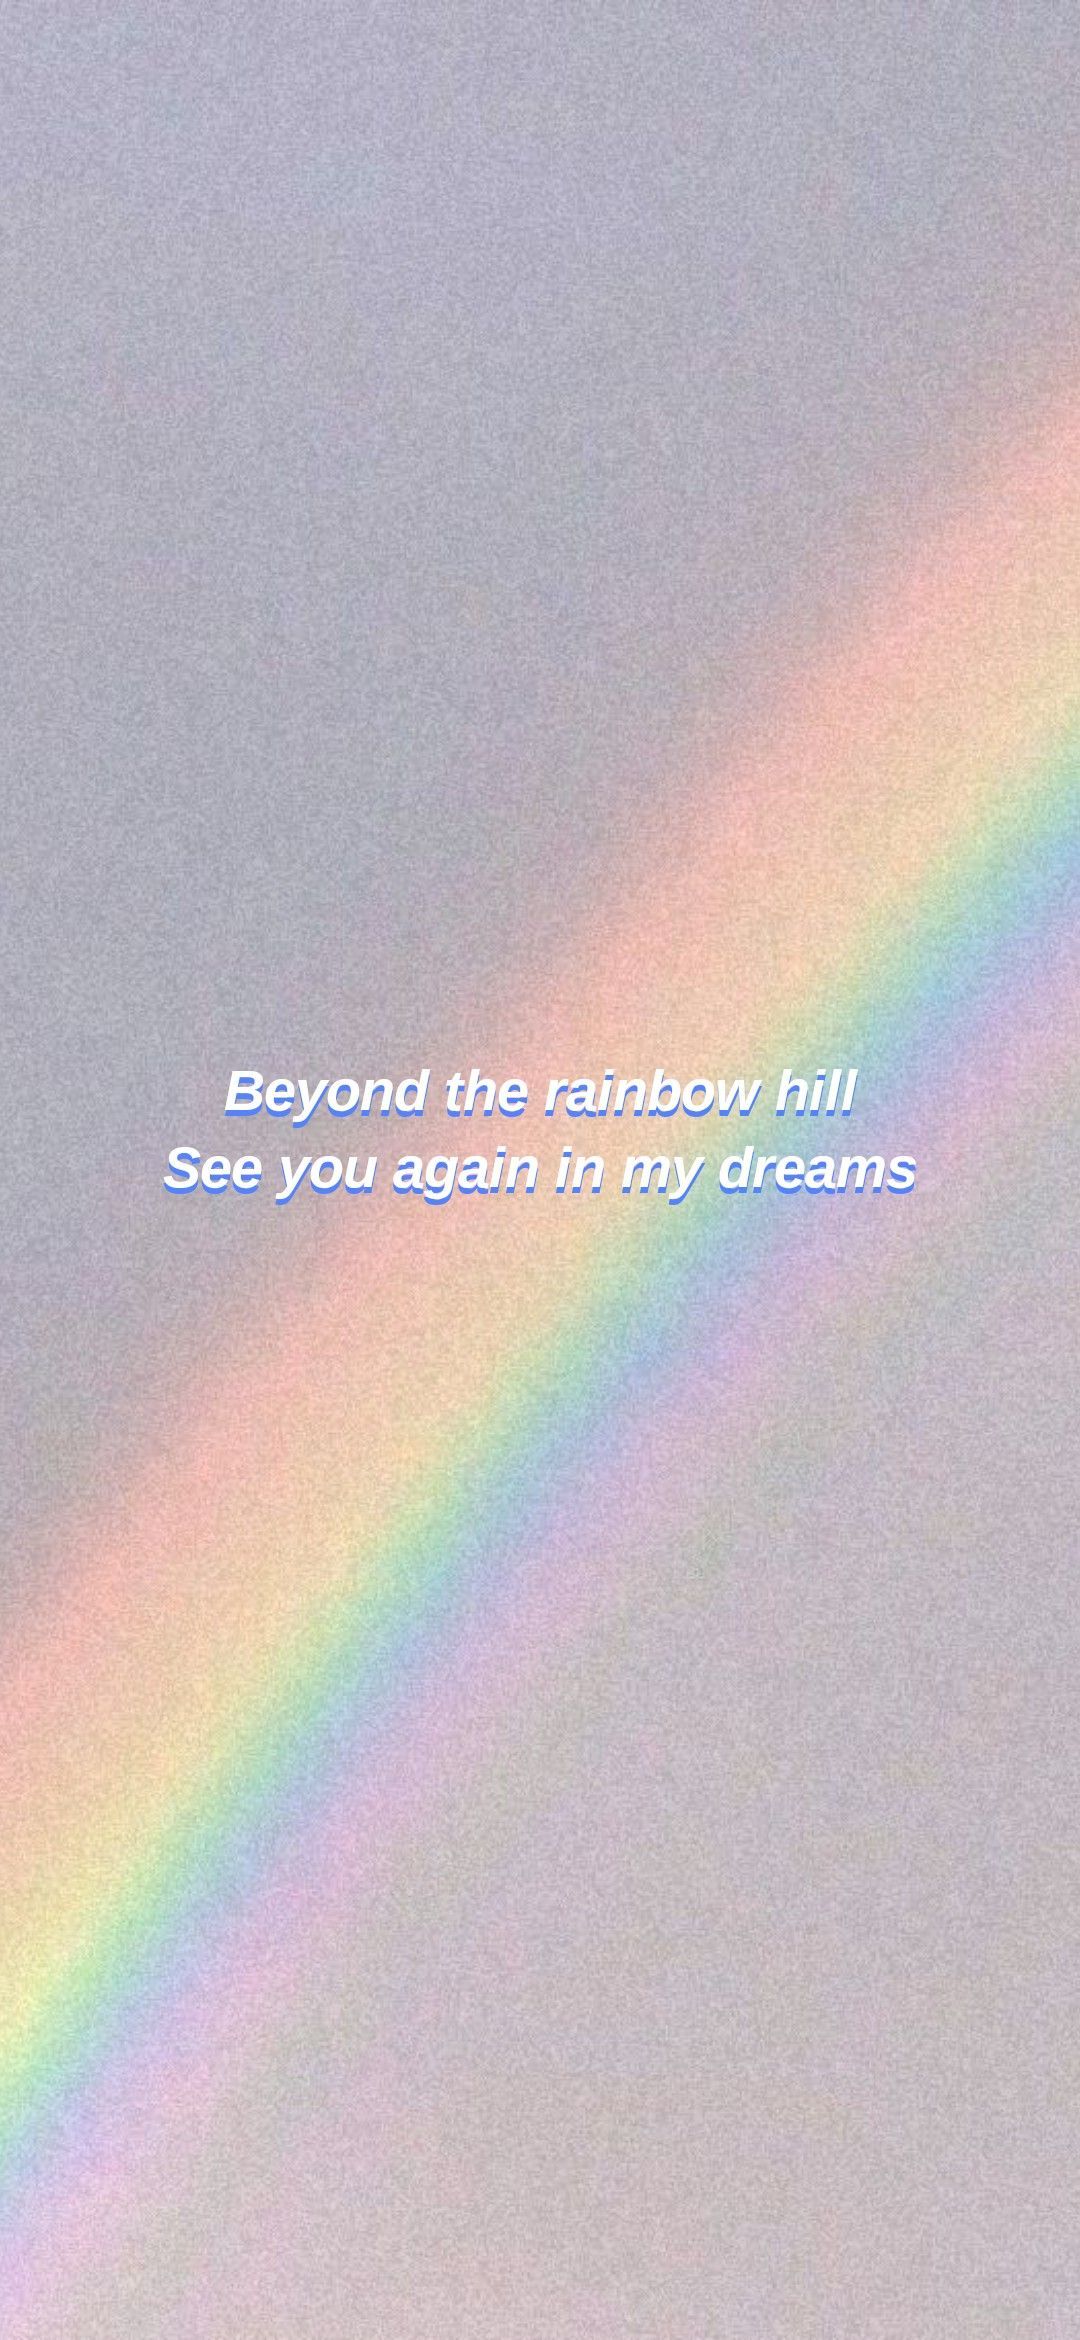 Behind the rainbow hill see you again - Rainbows